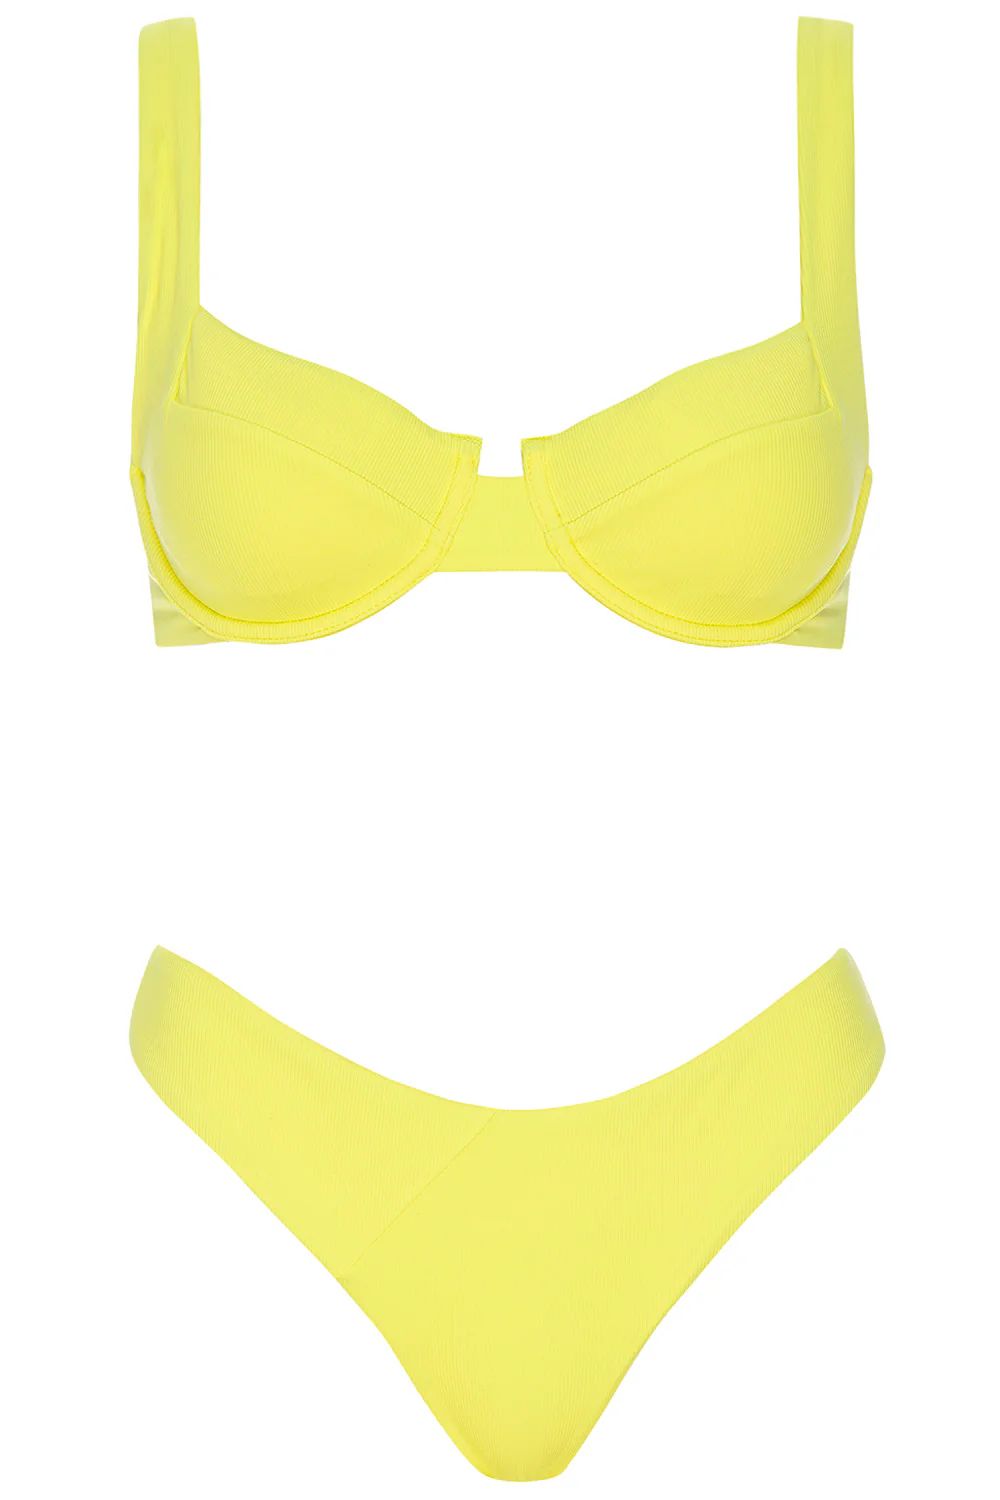 Laguna Bikini Yellow Ribbed Set | VETCHY